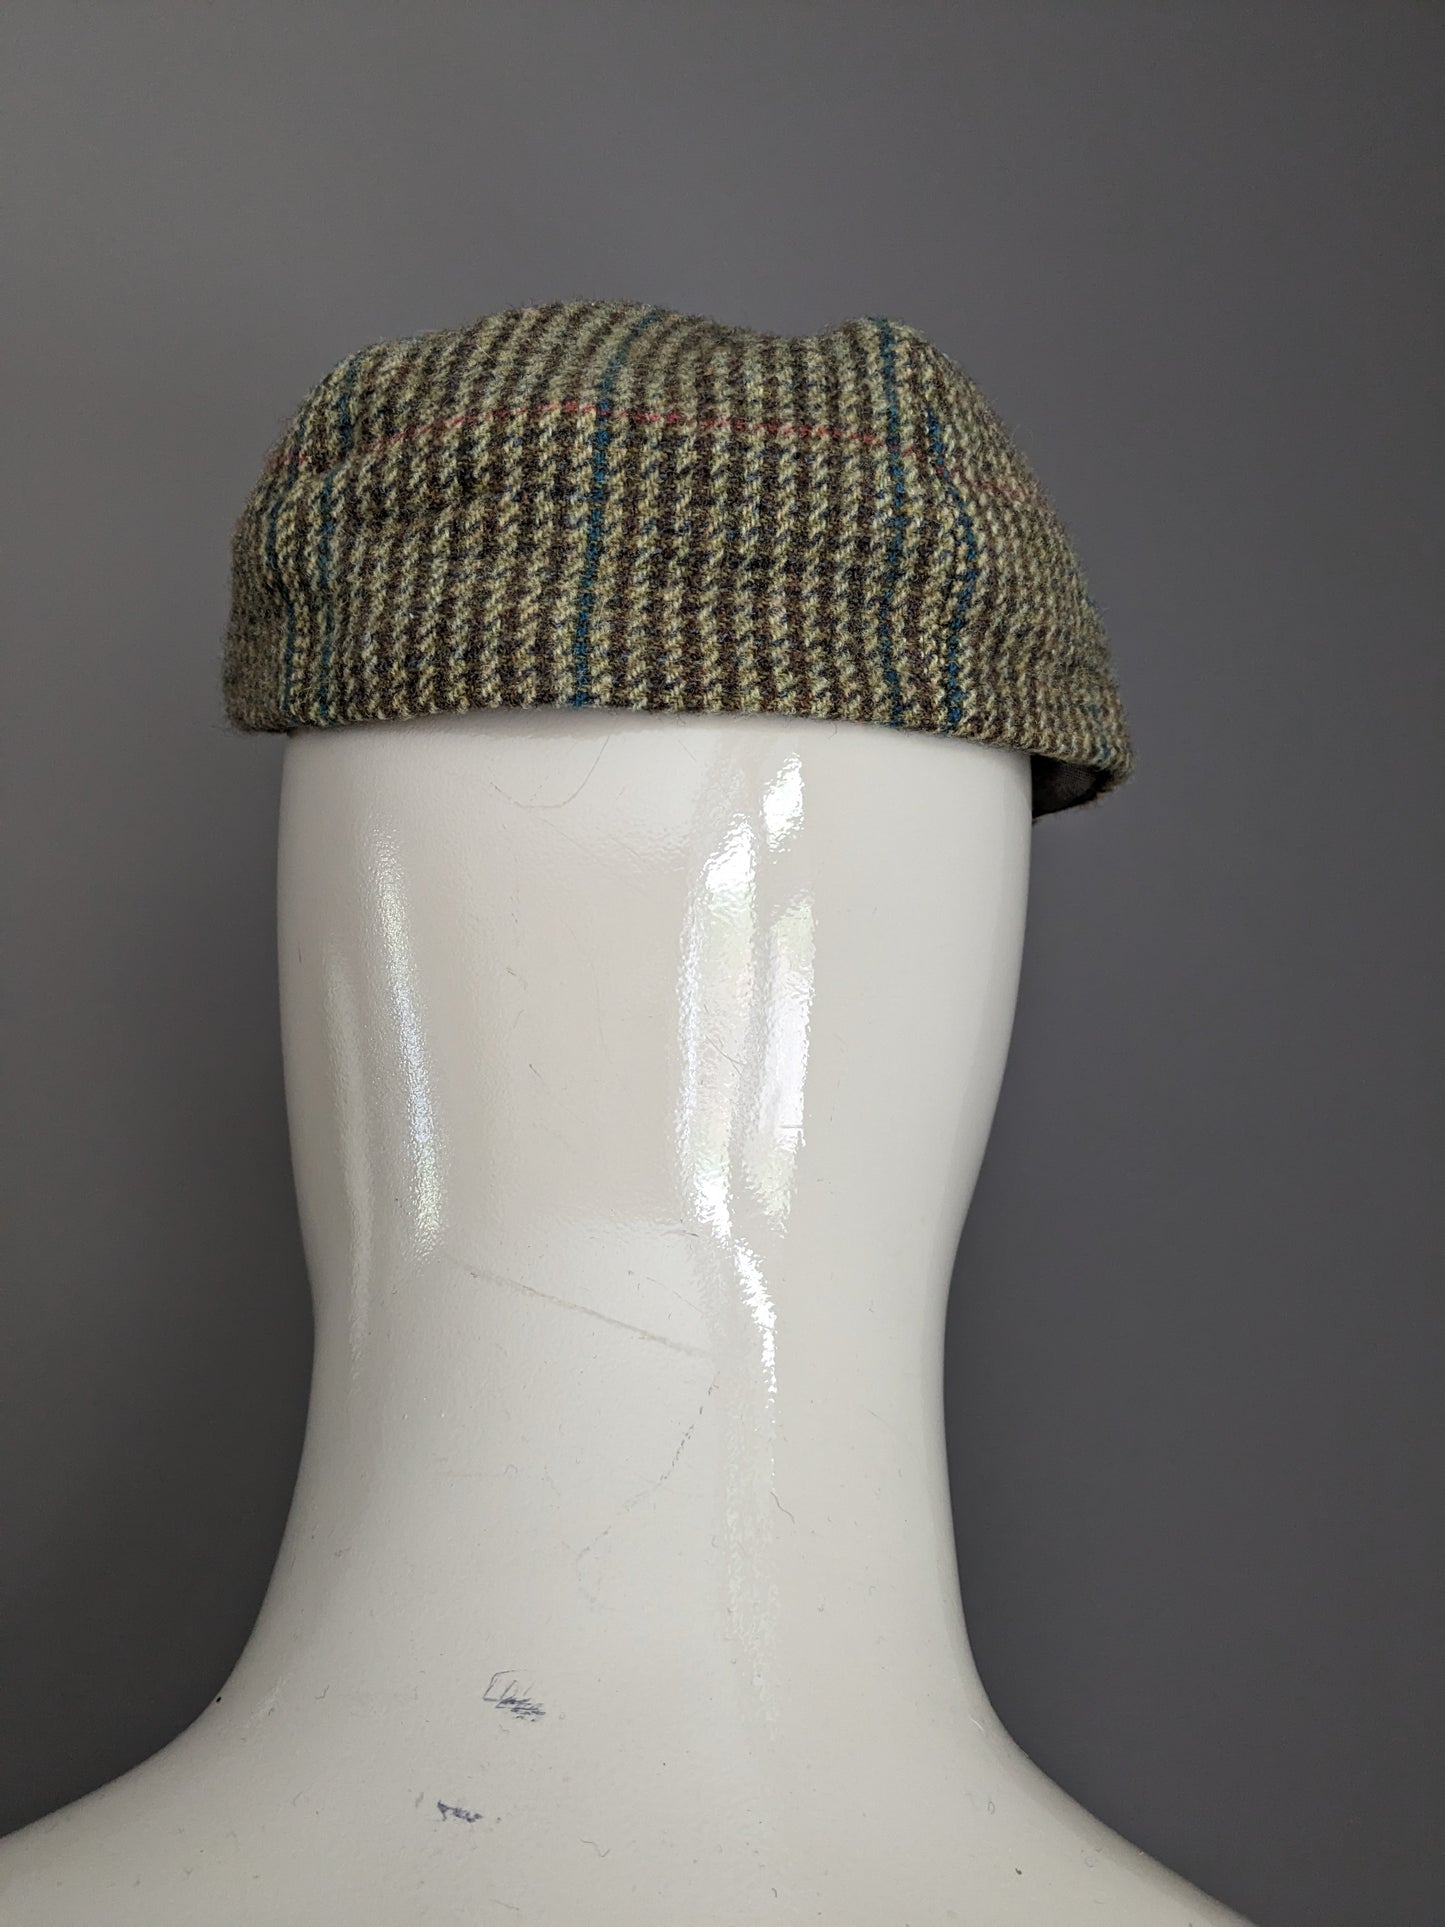 Vintage John Hanly & Co Woolen Plat Cap / Cap. Rouge bleu vert marron vérifié. 56 cm circonférence.